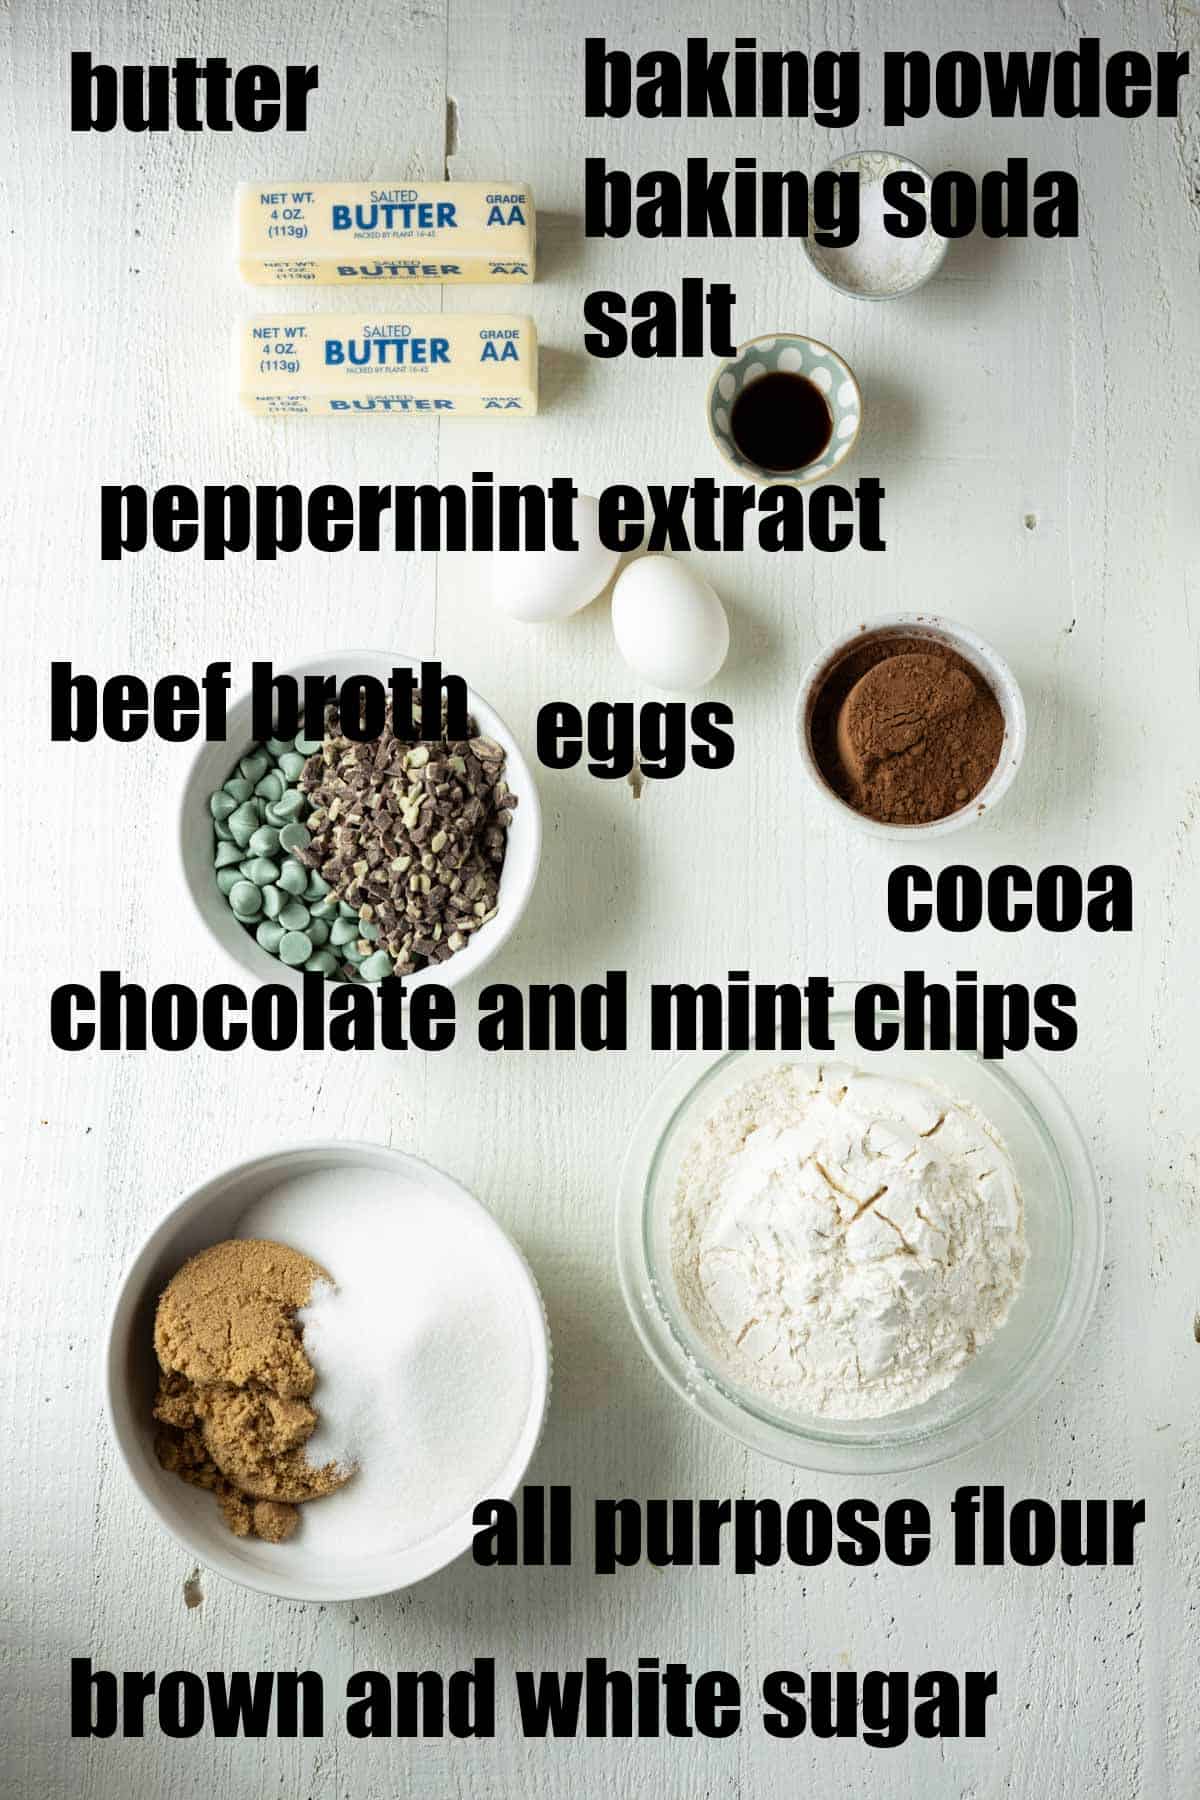 Ingredients needed to make chocolate mint cookies.